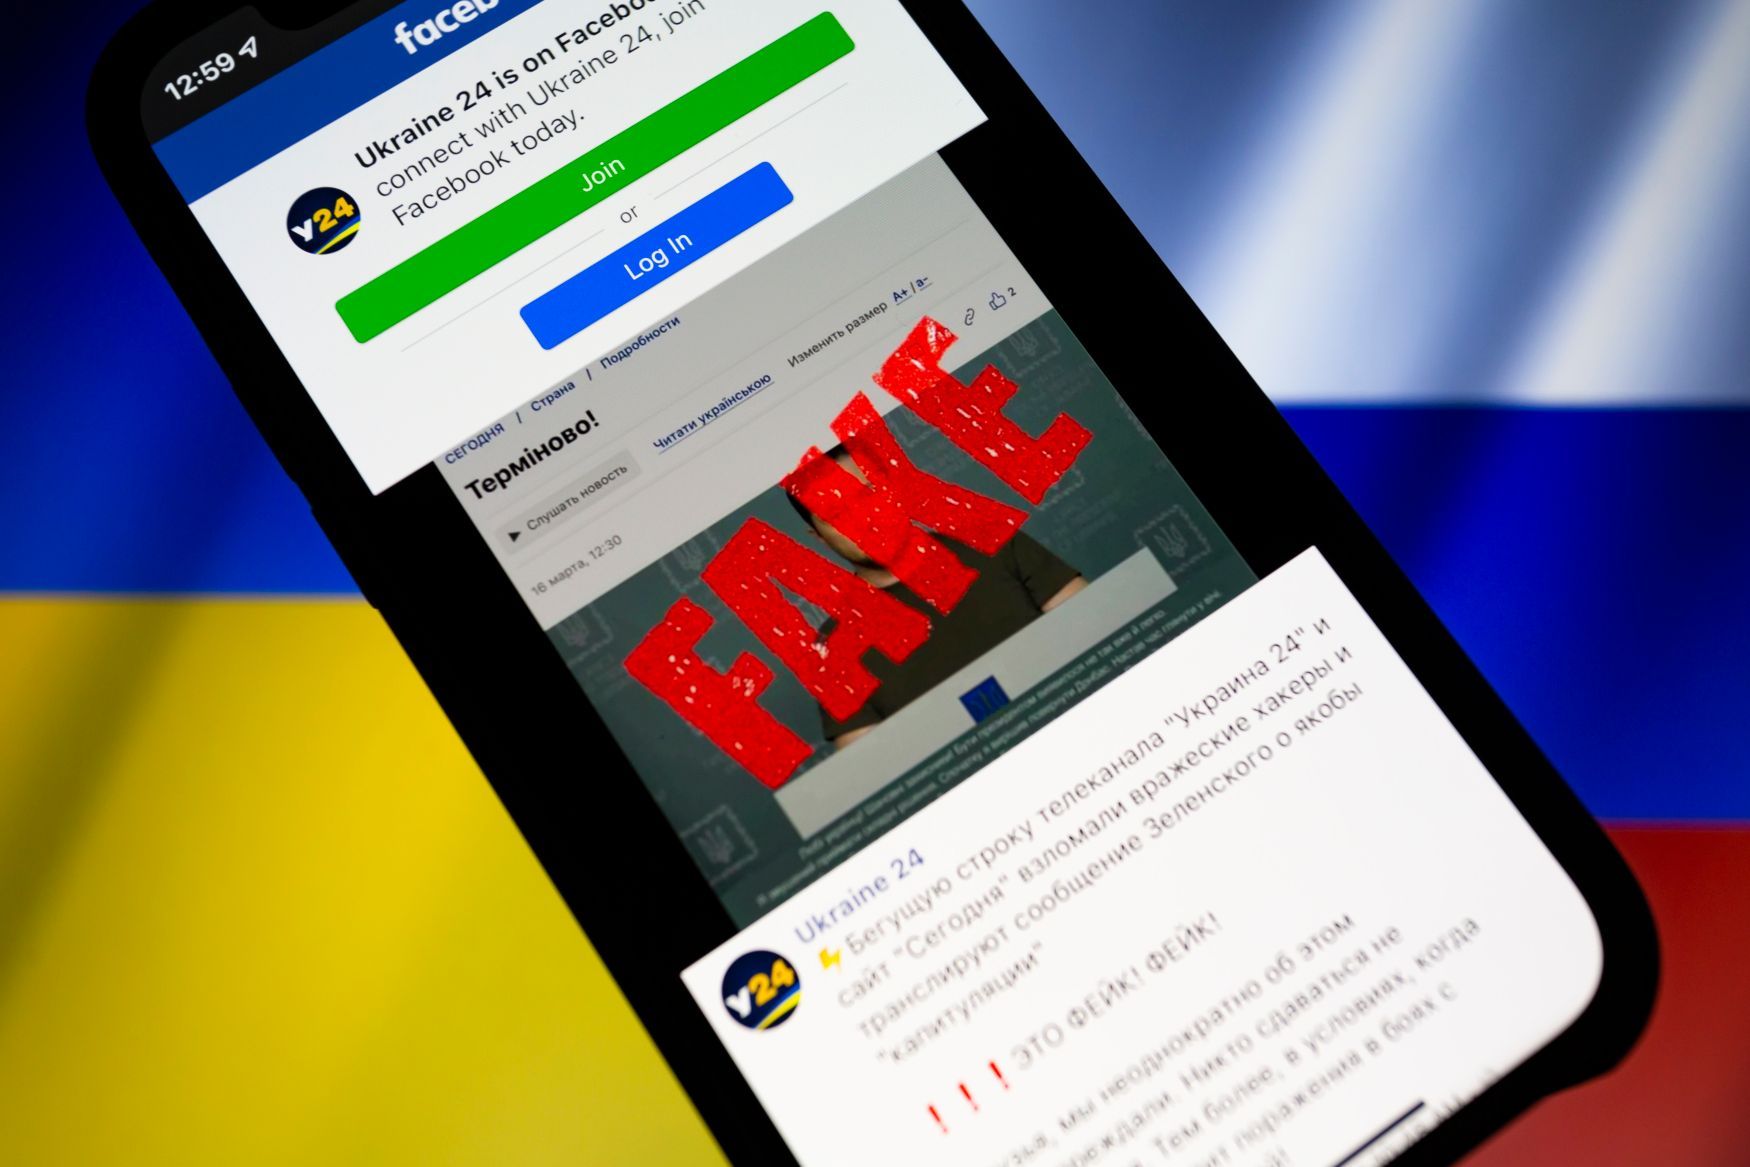 Ilustrační foto: Fake news, Ukrajina, 2